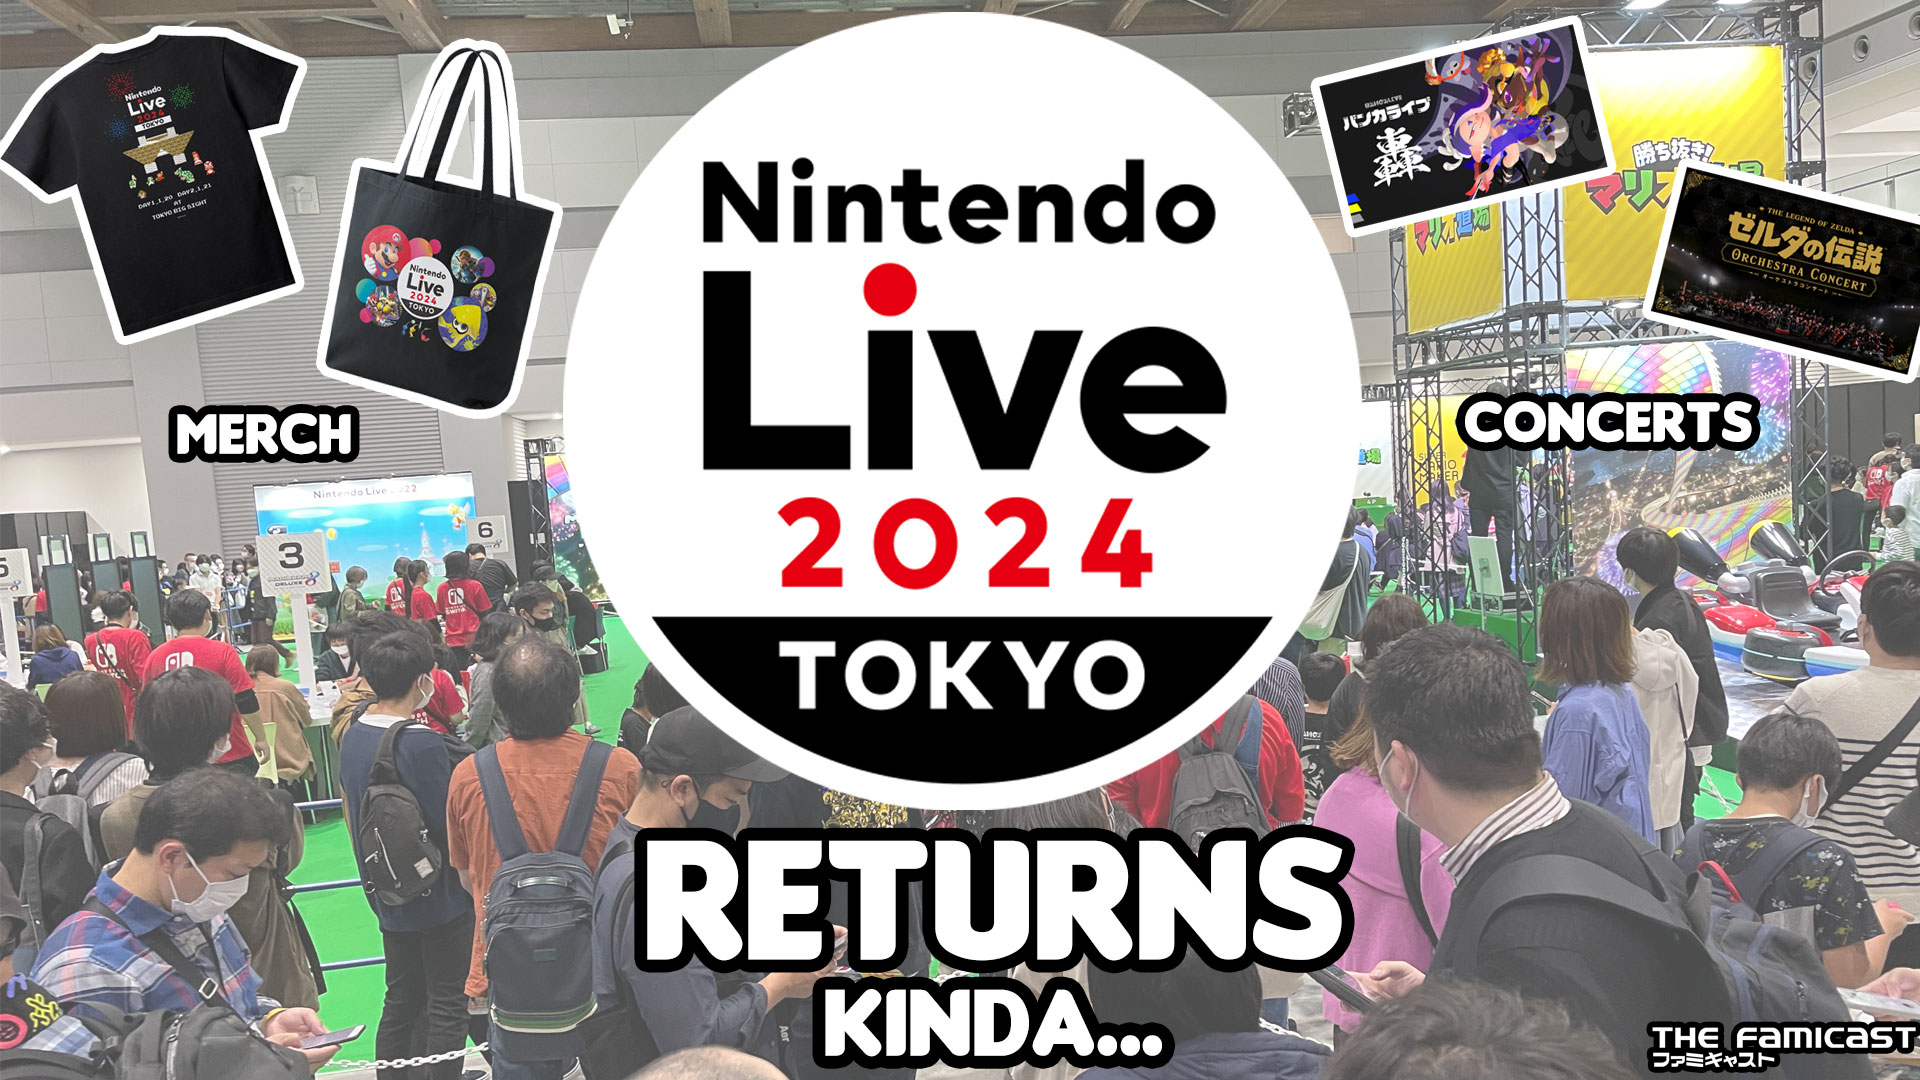 Nintendo Live 2024 Tokyo Returns...Kinda | Merch Showcase